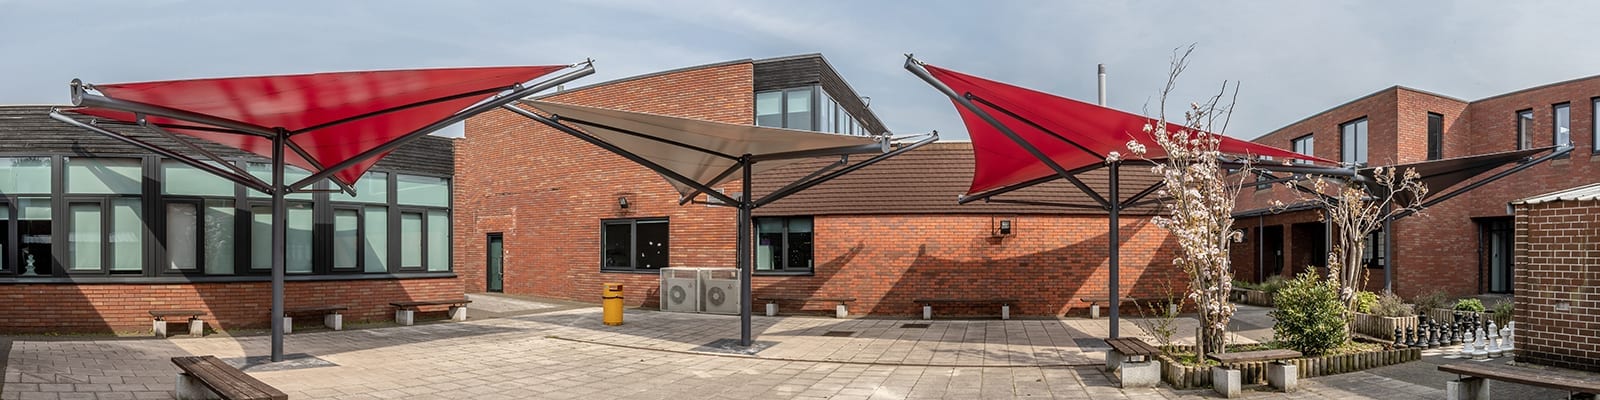 Red StarSail Canopy at Alderlsey School